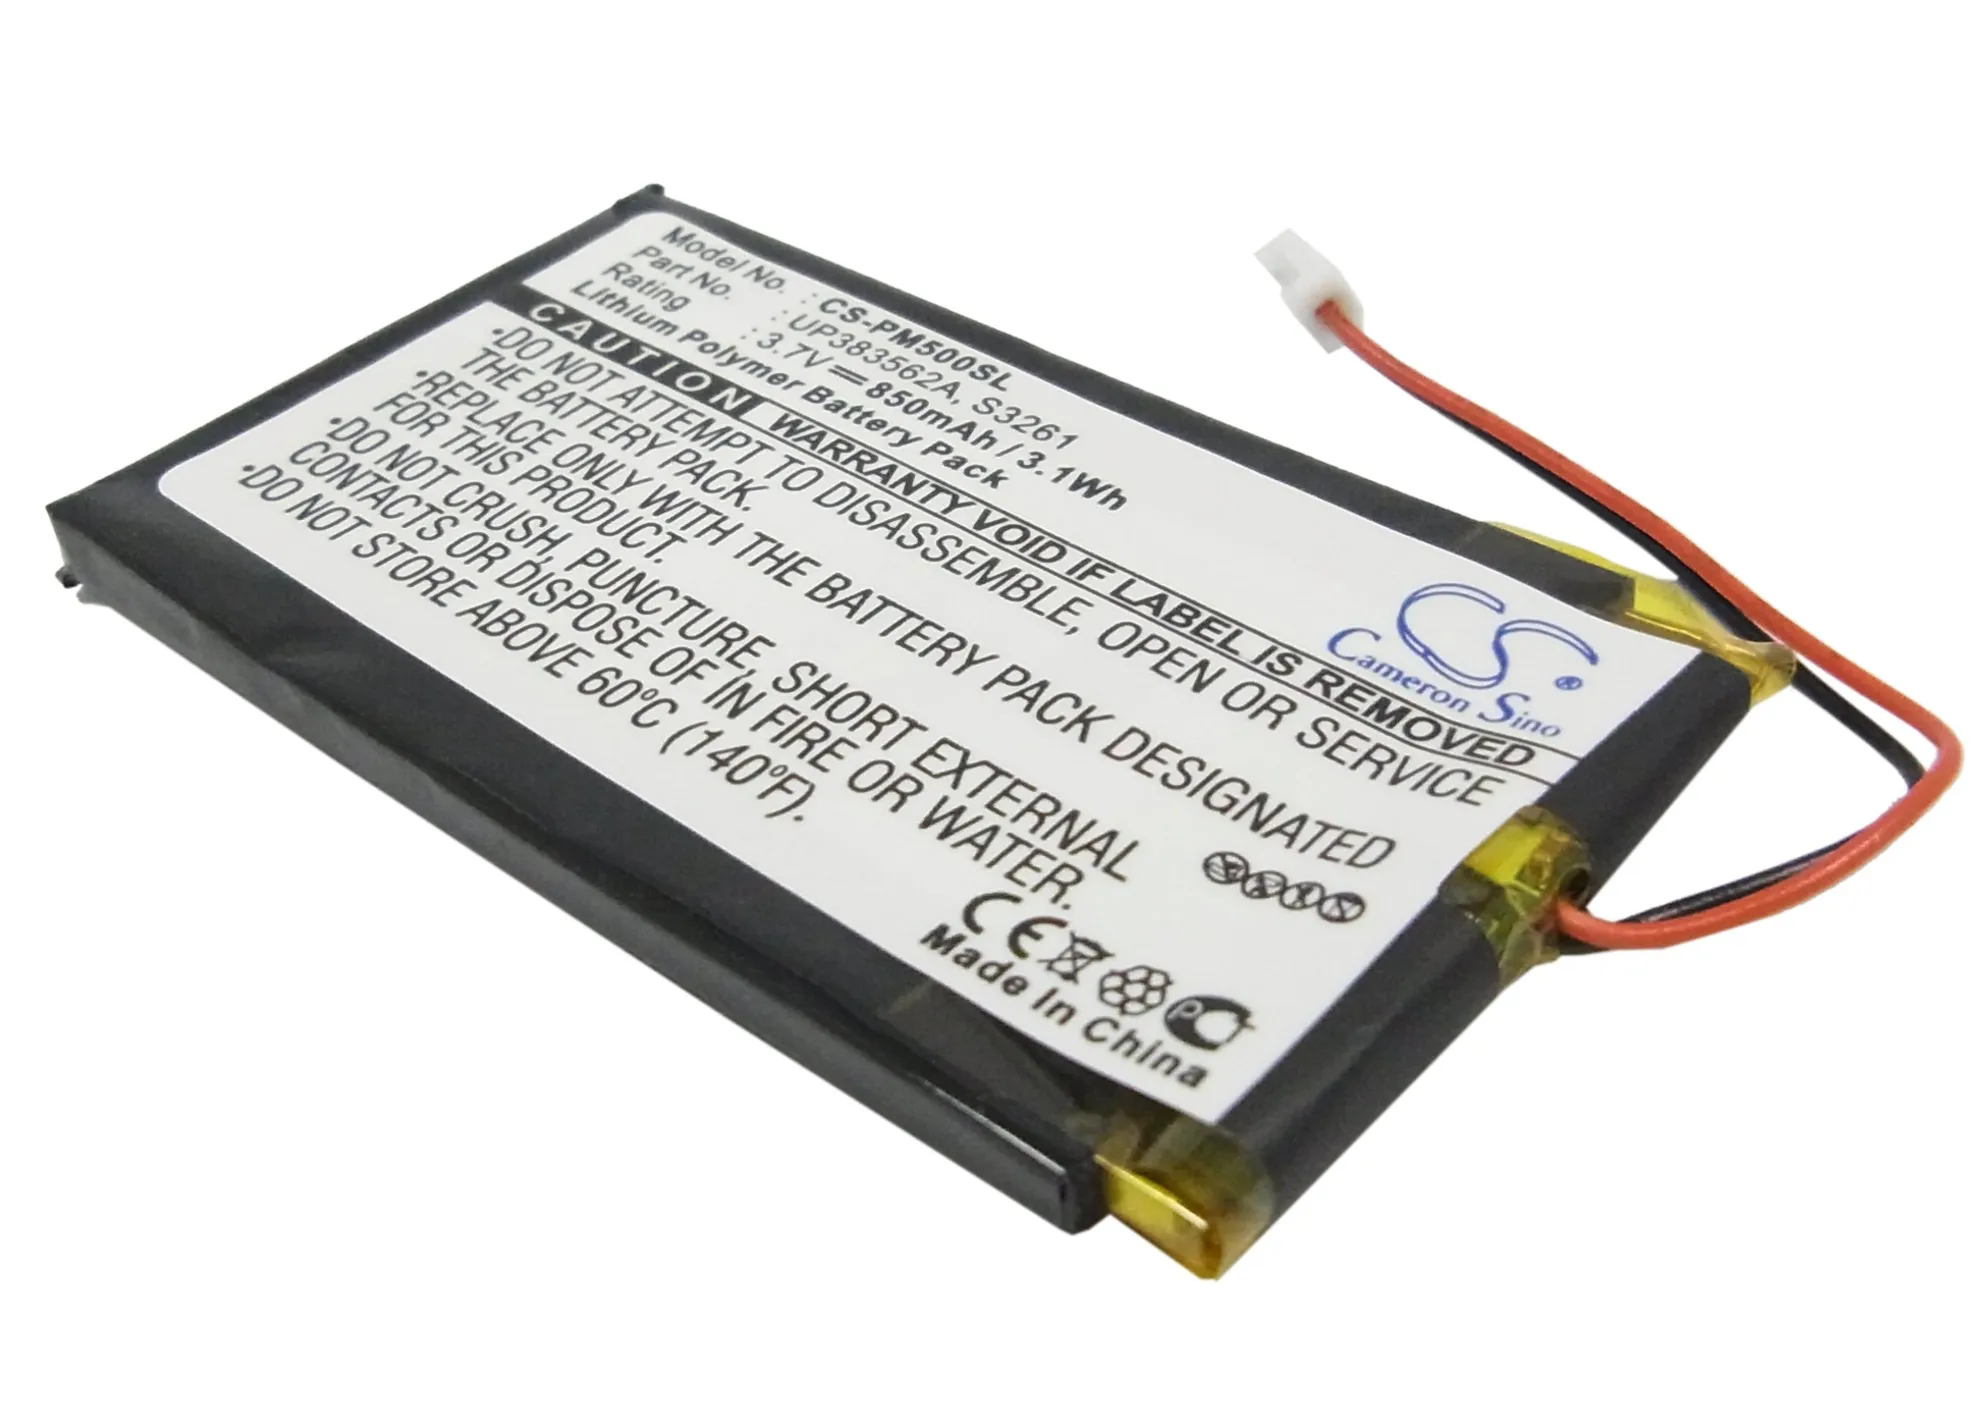 

CS 850mAh / 3.15Wh battery for Palm M500, M505, M515 IA1TB12B1, ICF383461, LAB363562B, PA1371, S3261, UP383562A